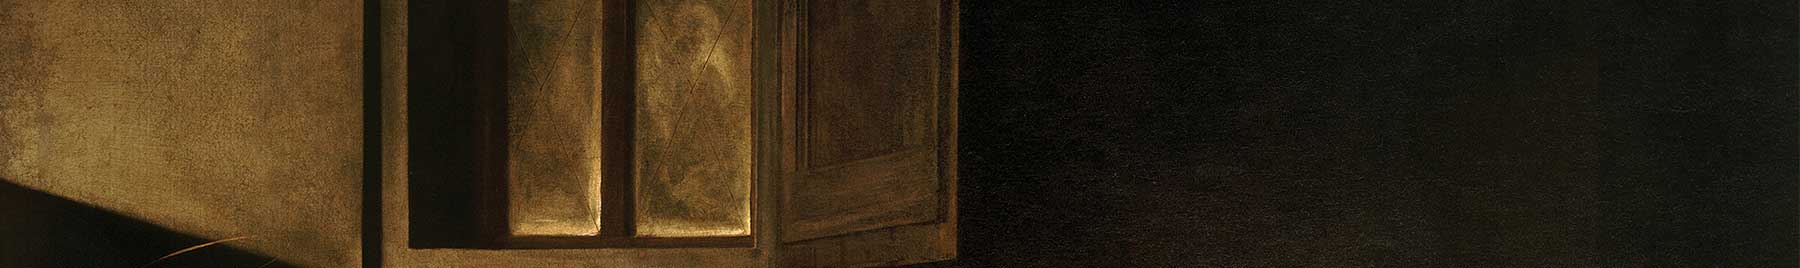 detail, Michelangelo Merisi da Caravaggio, The Calling of Saint Matthew 1599–1600, oil on canvas